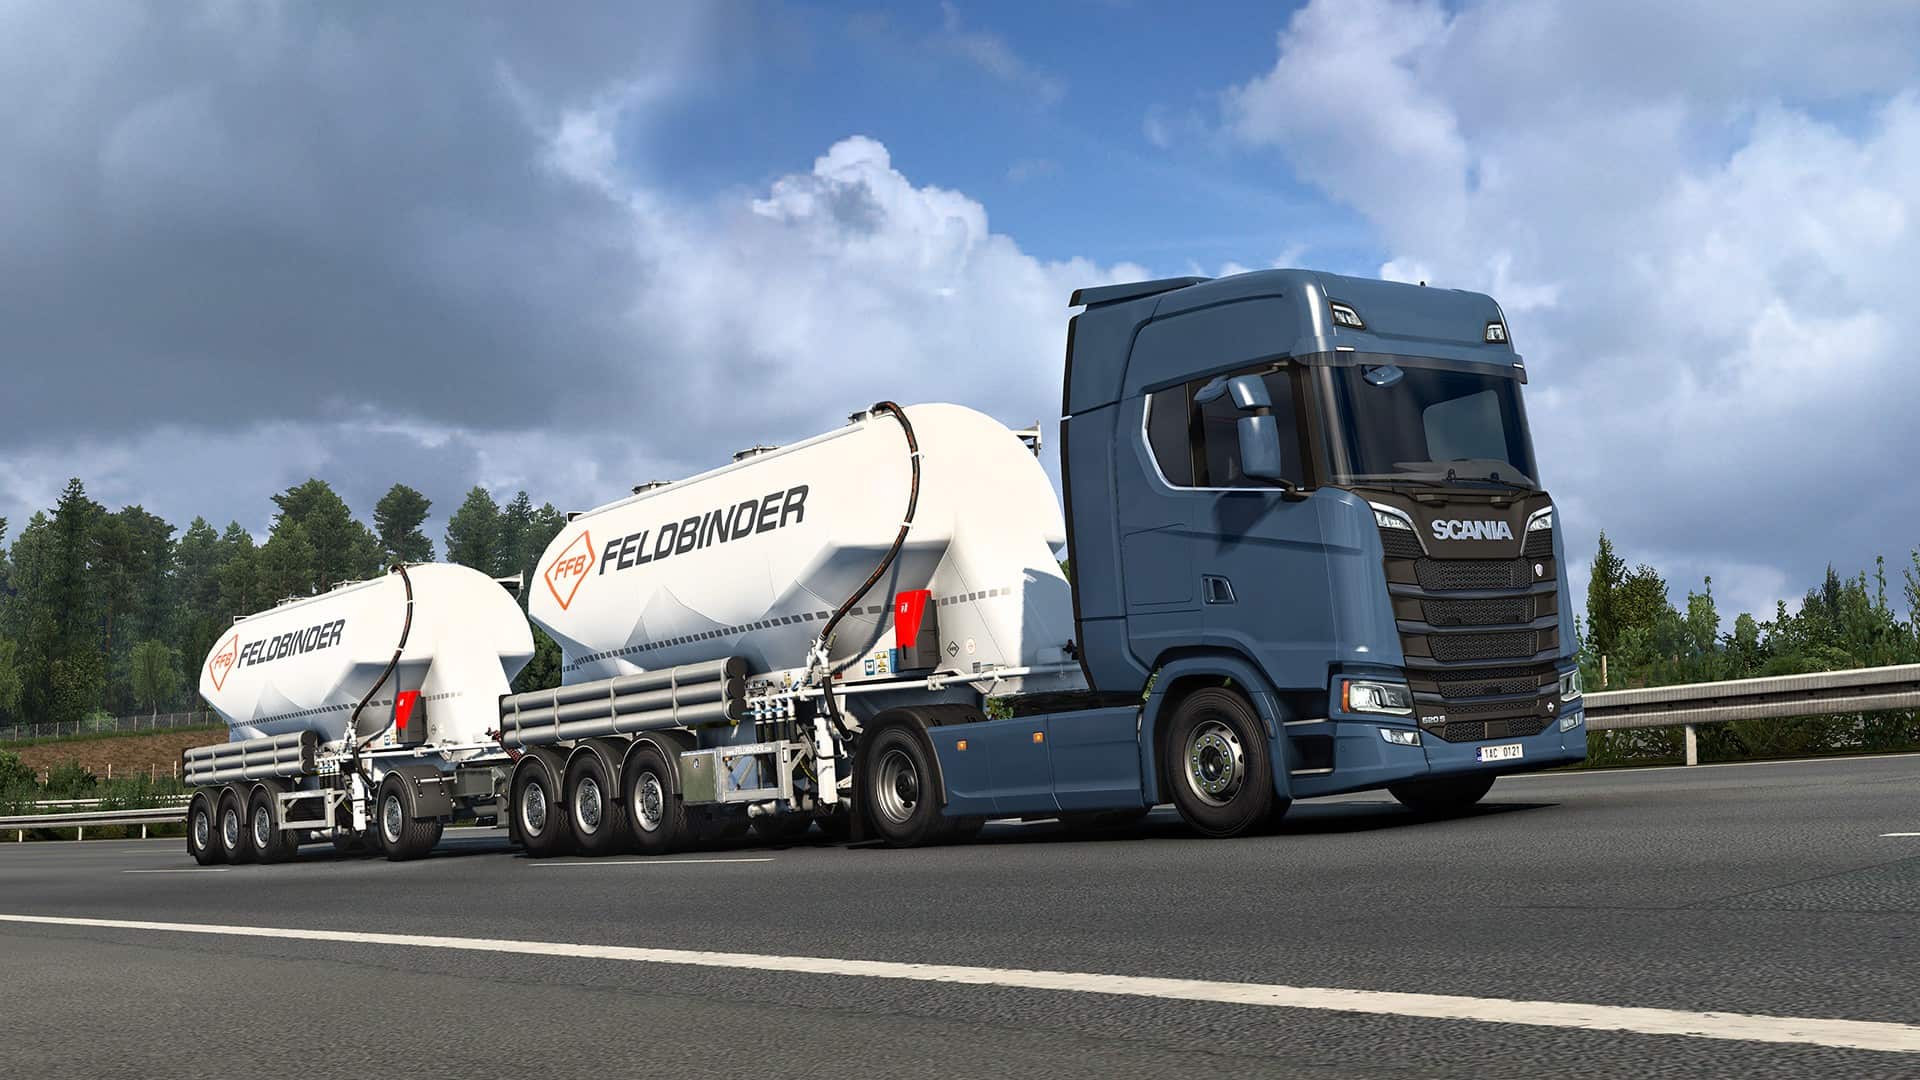 Euro Truck Simulator 2 partners with iconic Feldbinder brand in